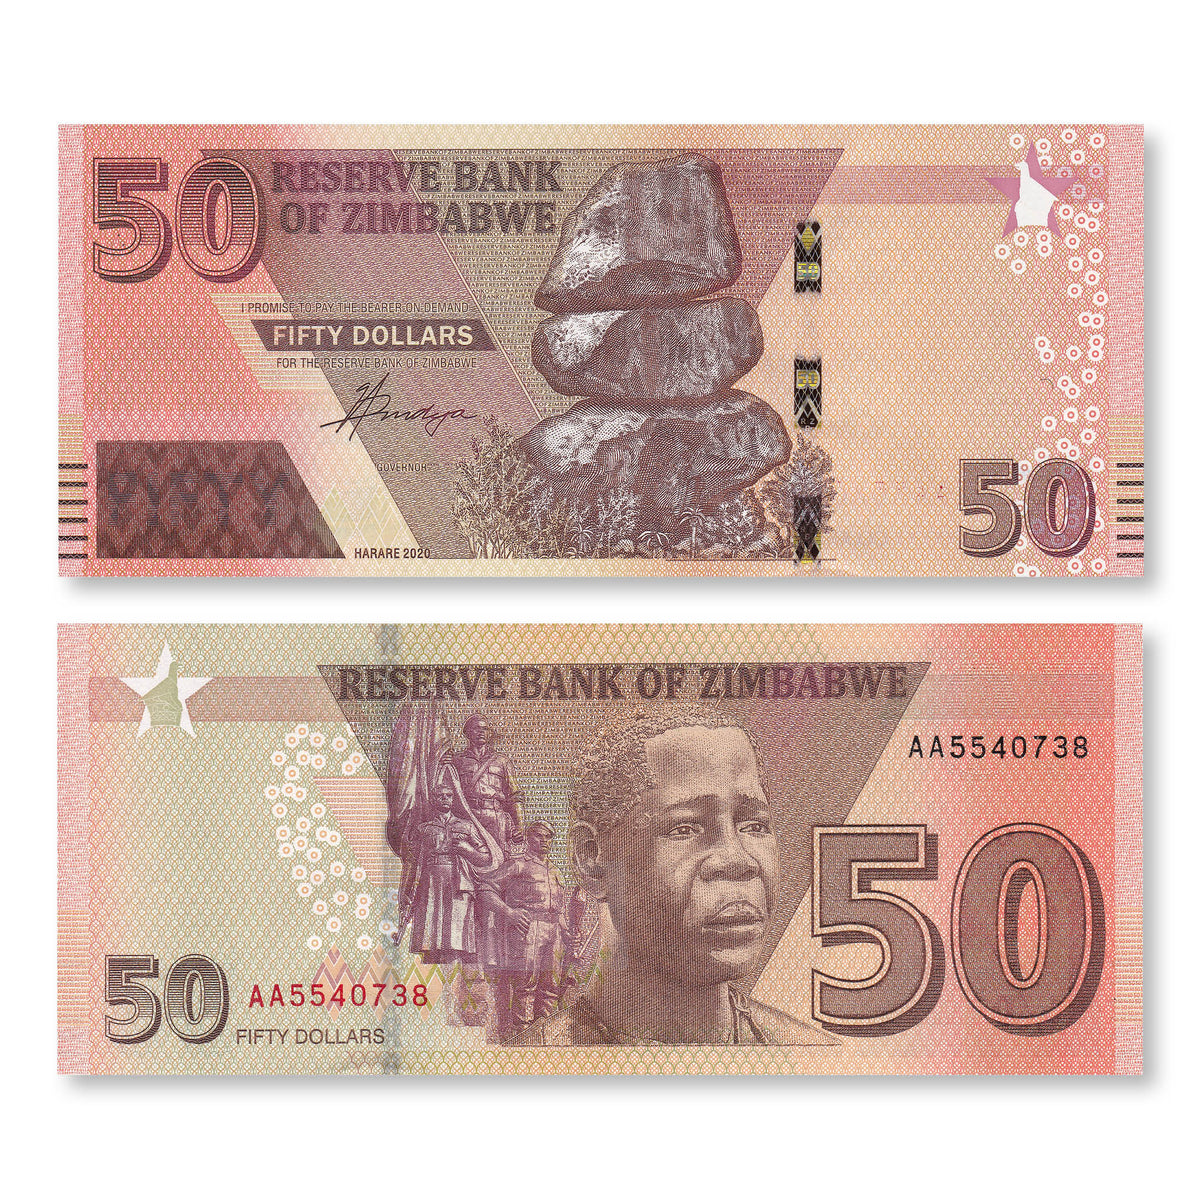 Zimbabwe 50 Dollars, 2020 (2021), B196a, UNC - Robert's World Money - World Banknotes